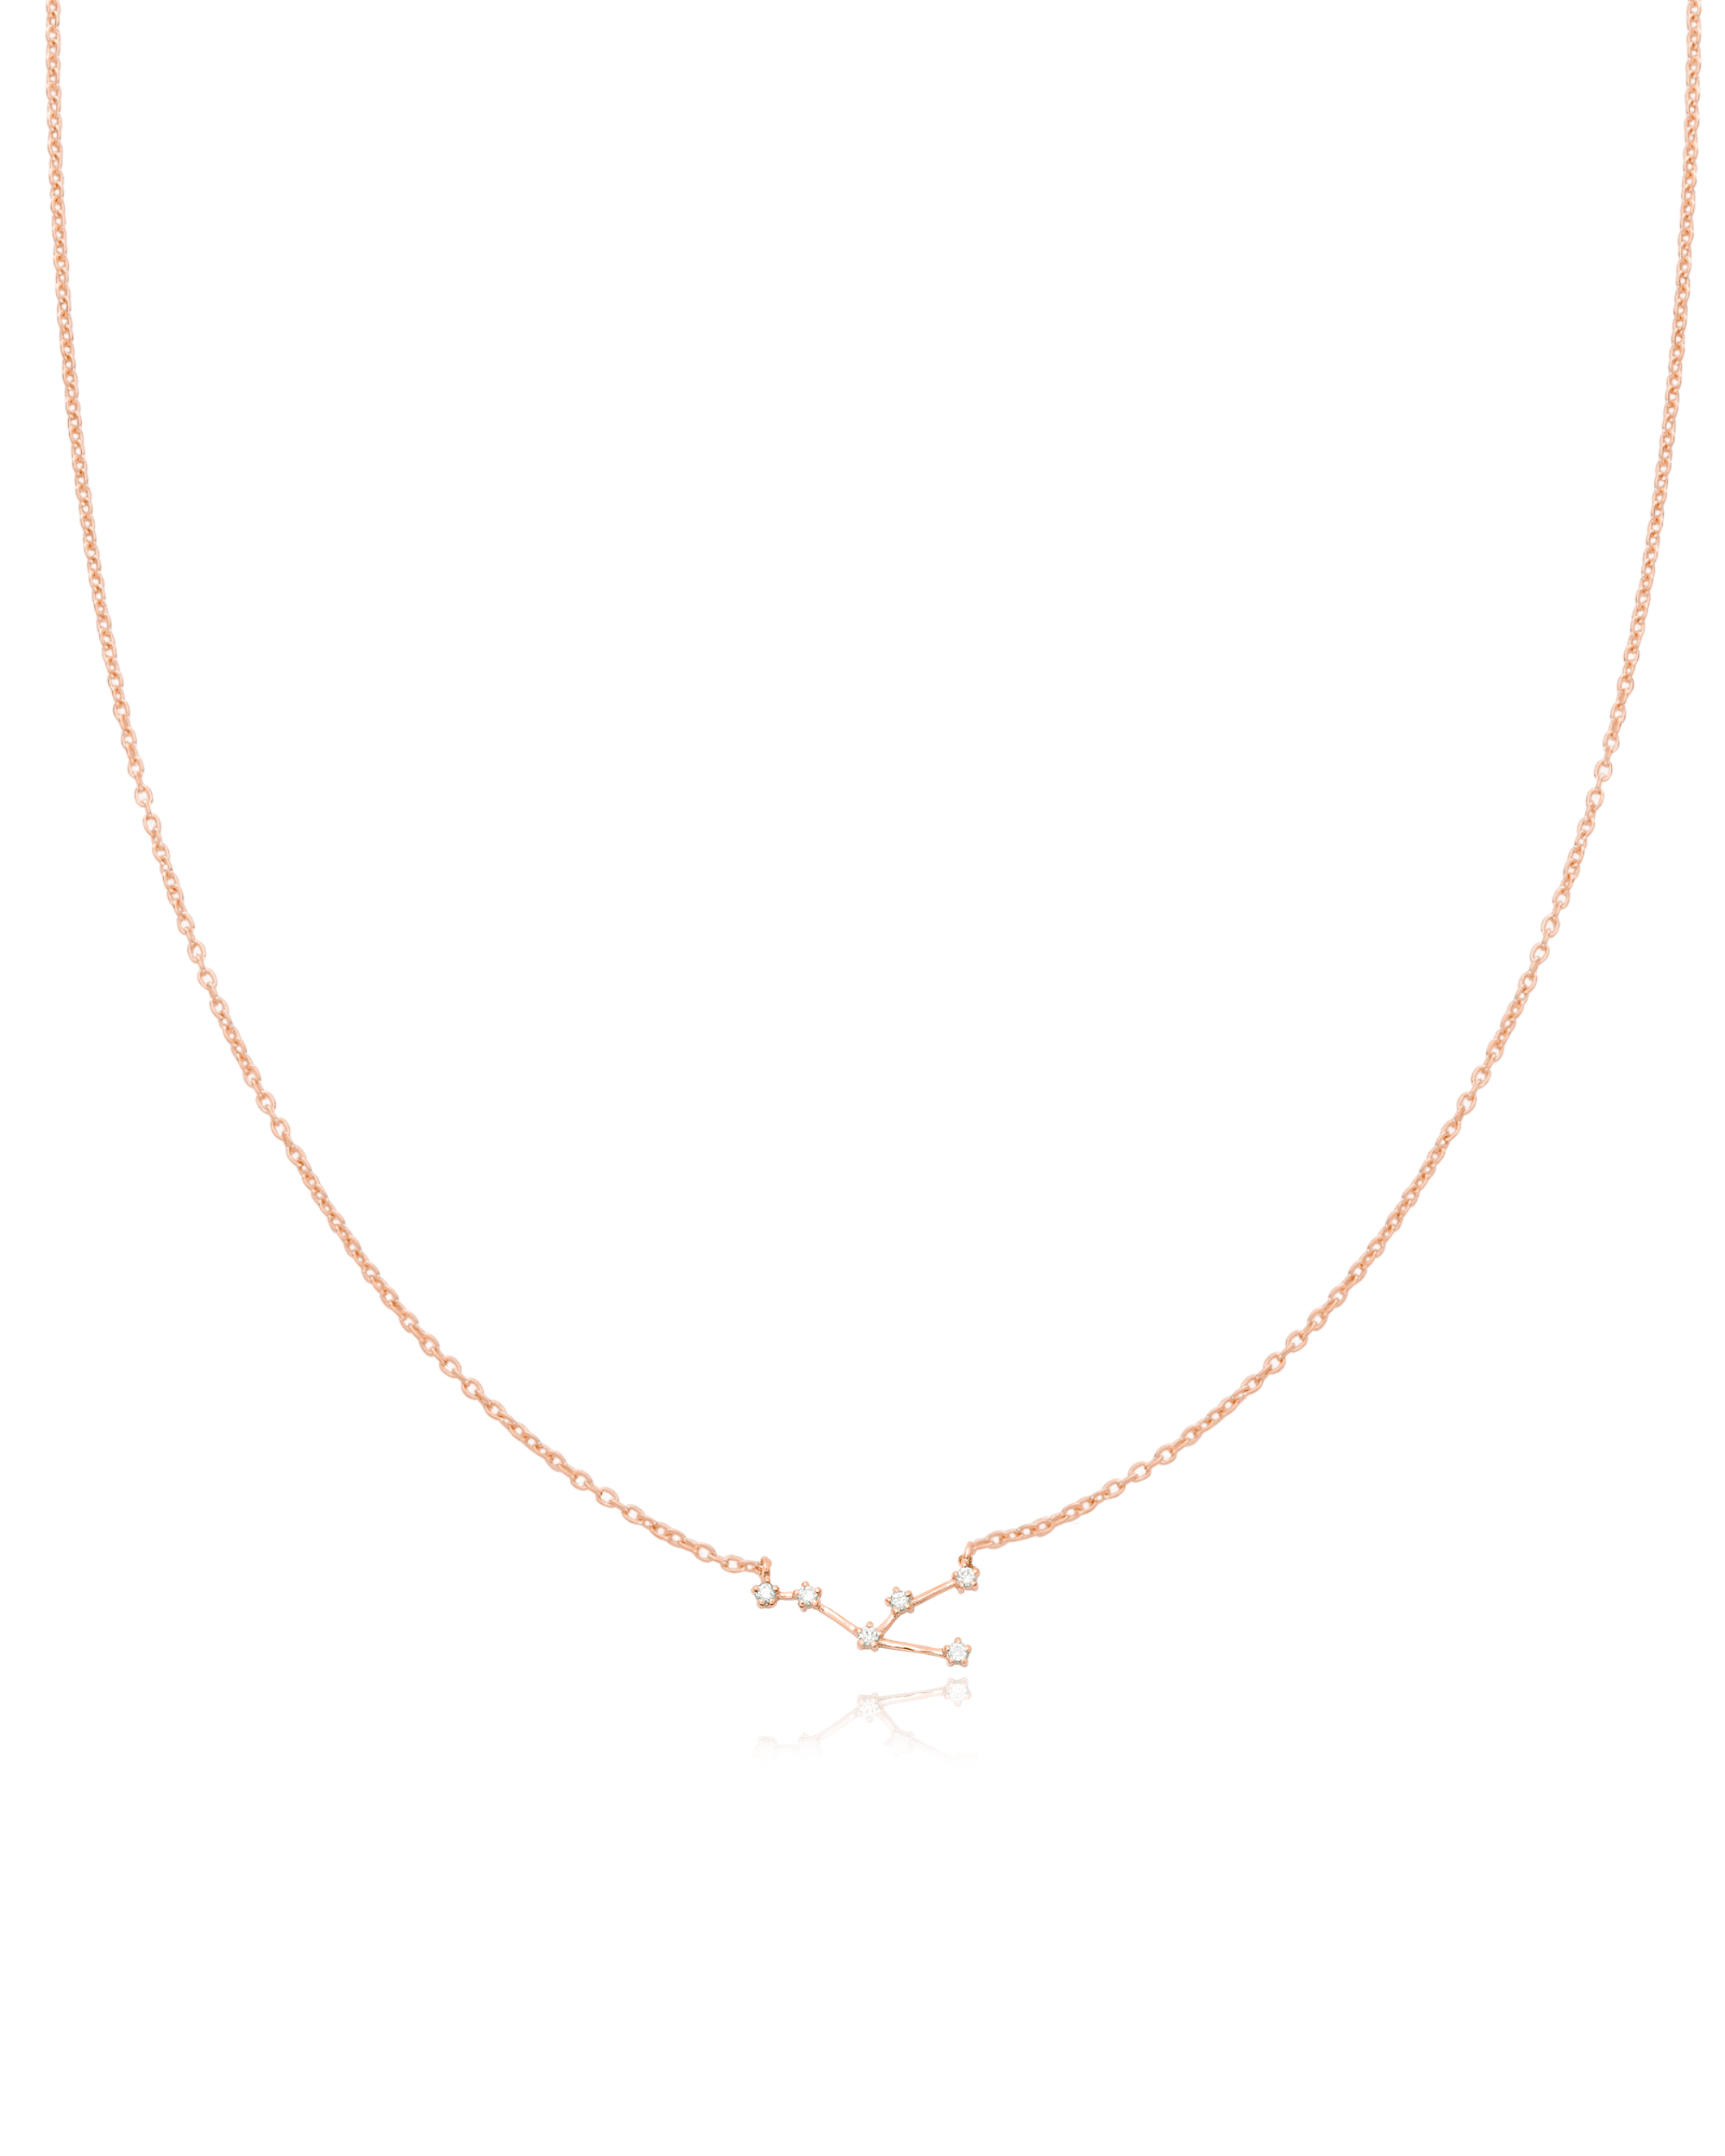 Taurus Constellation Necklace - 18K Gold Vermeil Necklaces magal-dev 